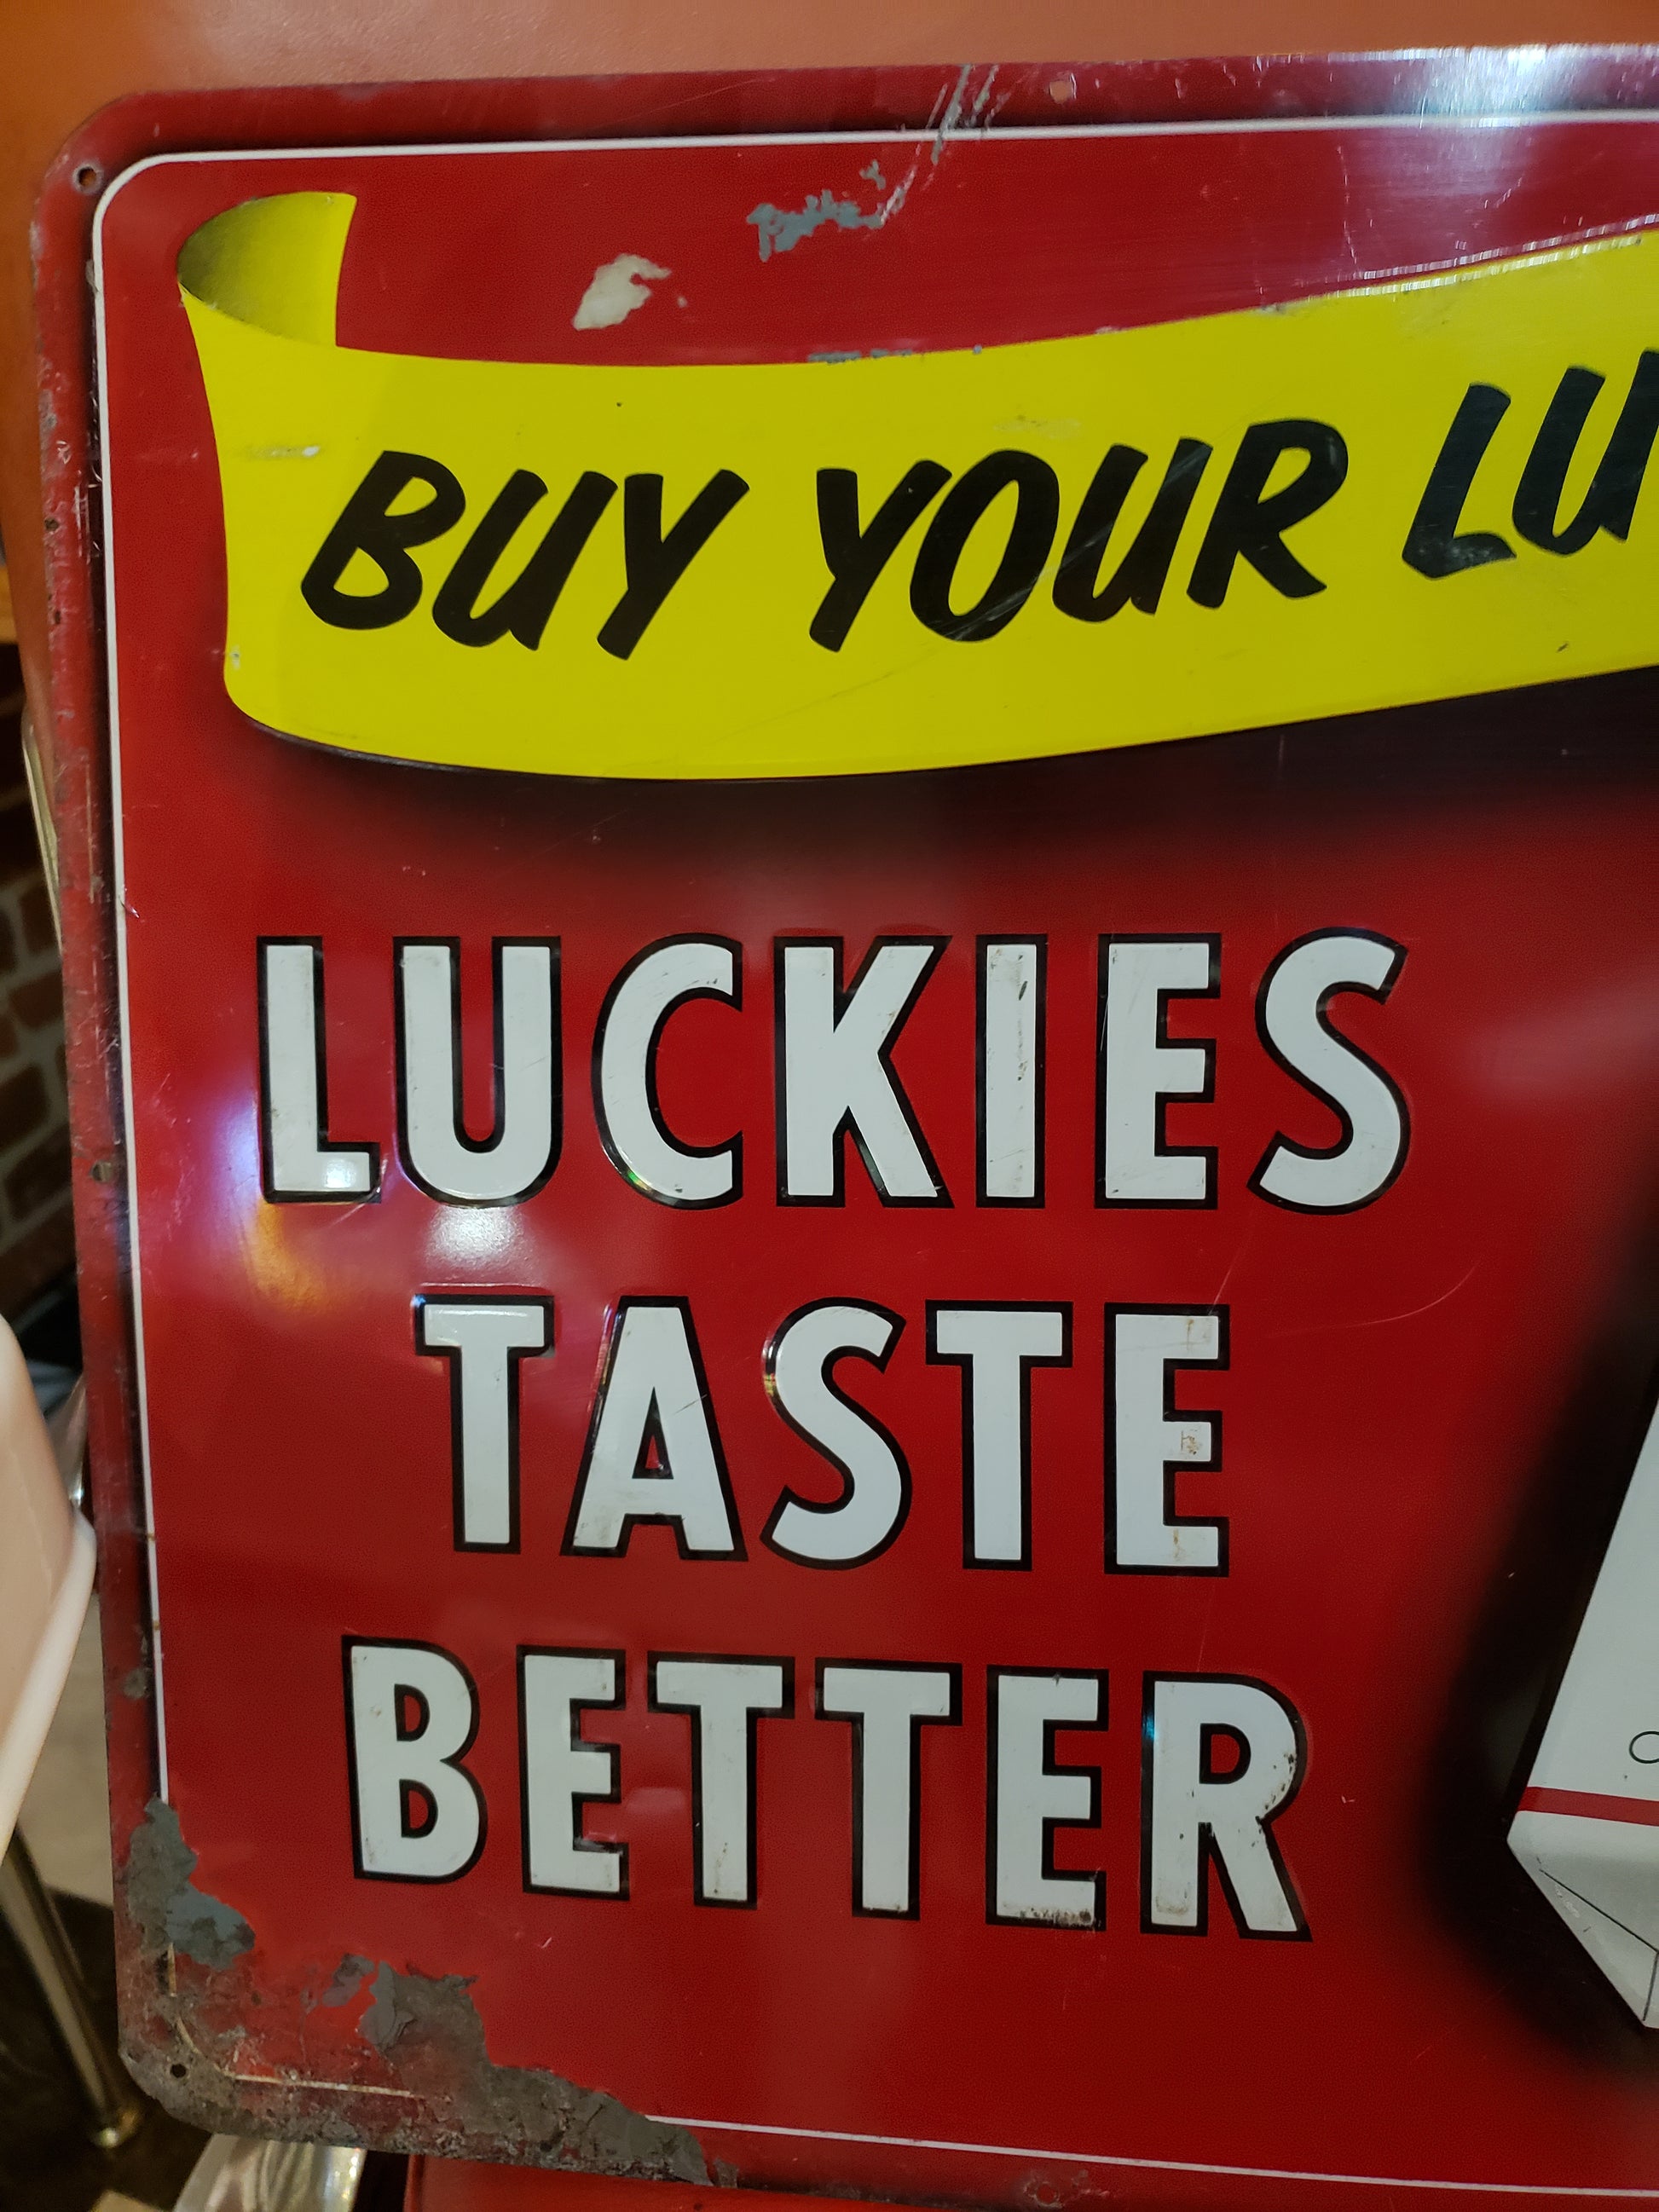 231 Lucky Brand Reviews  luckybrand.com @ PissedConsumer